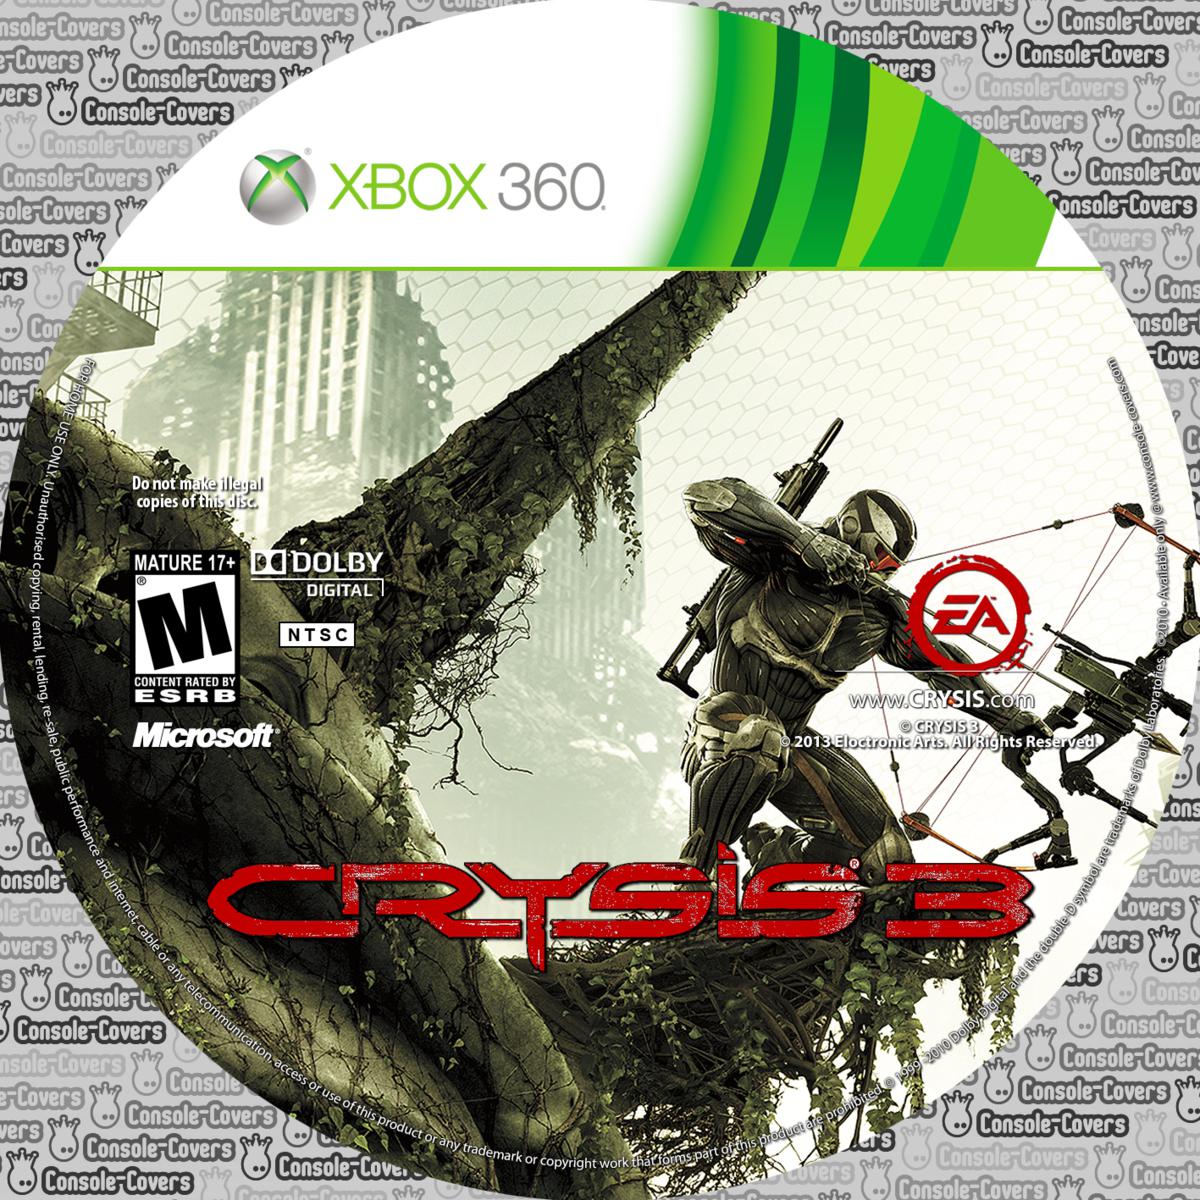 Crysis xbox 360. Crysis 3 Xbox 360 обложка. Crysis 2 Xbox 360 диск. Crysis 3 Xbox 360 диск. Крайзис 3 на Xbox 360.